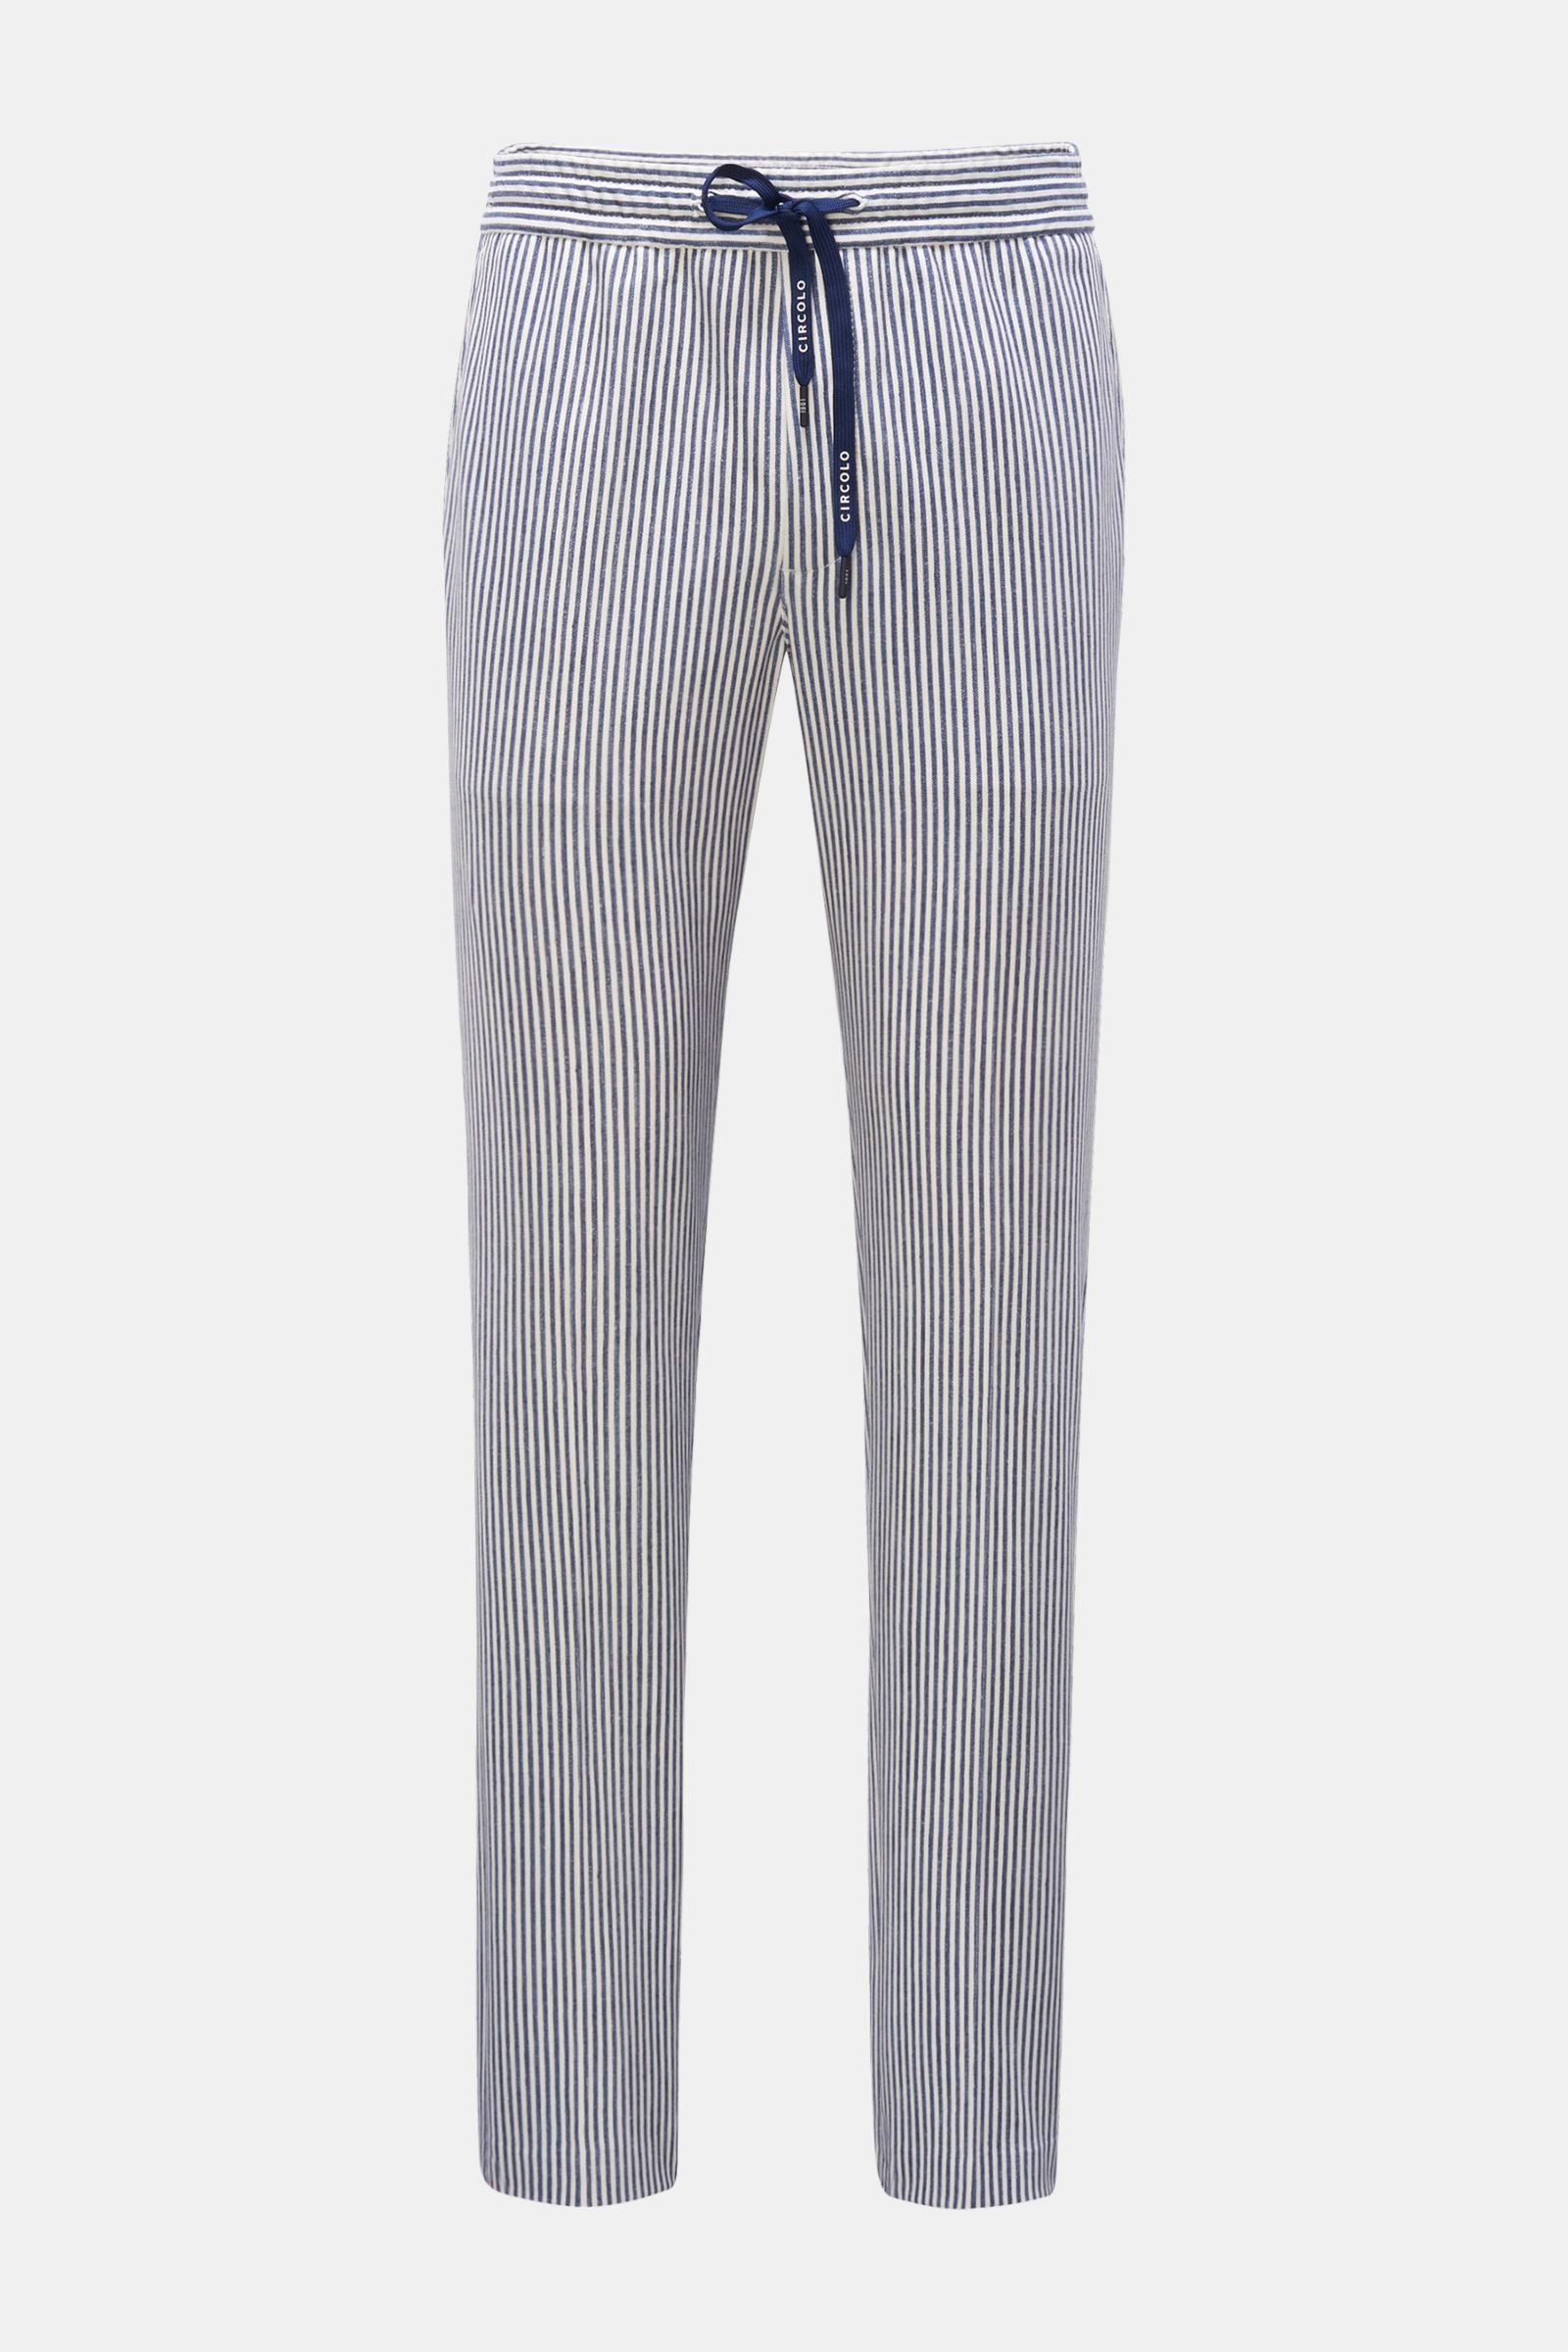 Jersey jogger pants grey-blue/white striped